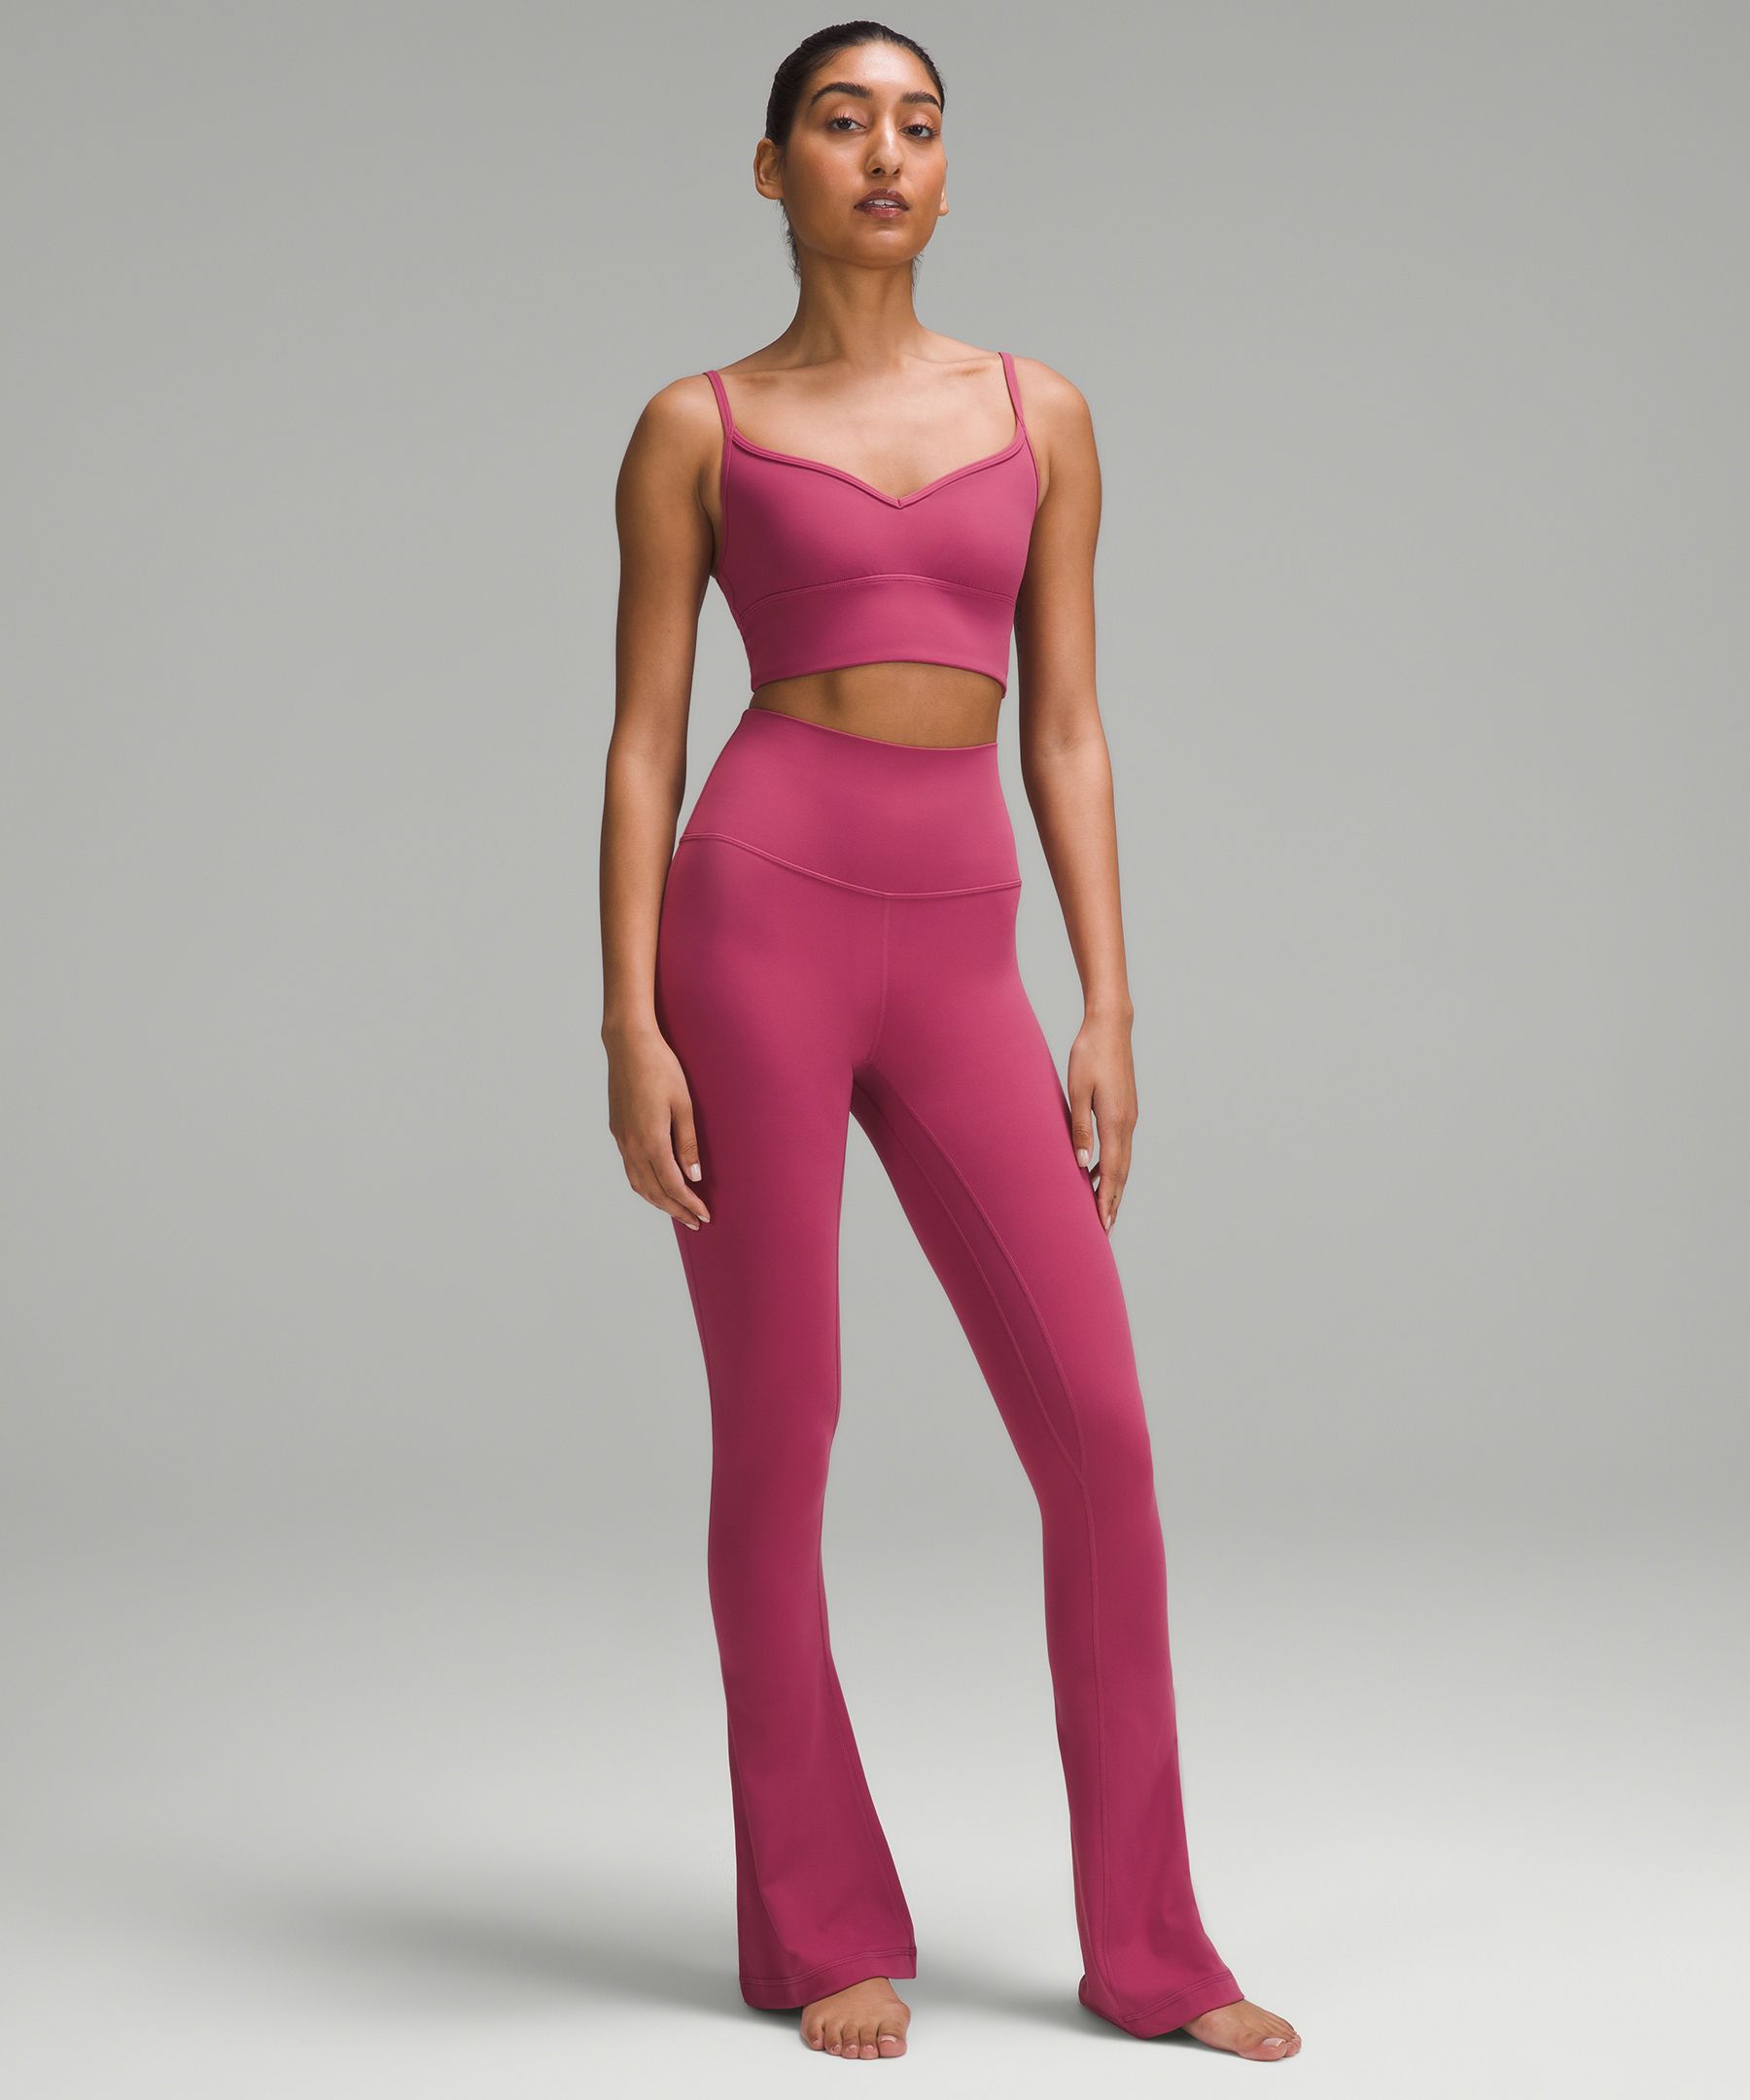 Lululemon Pink Tie Dye with Mesh Crop Legging- Size 4 (Inseam 16